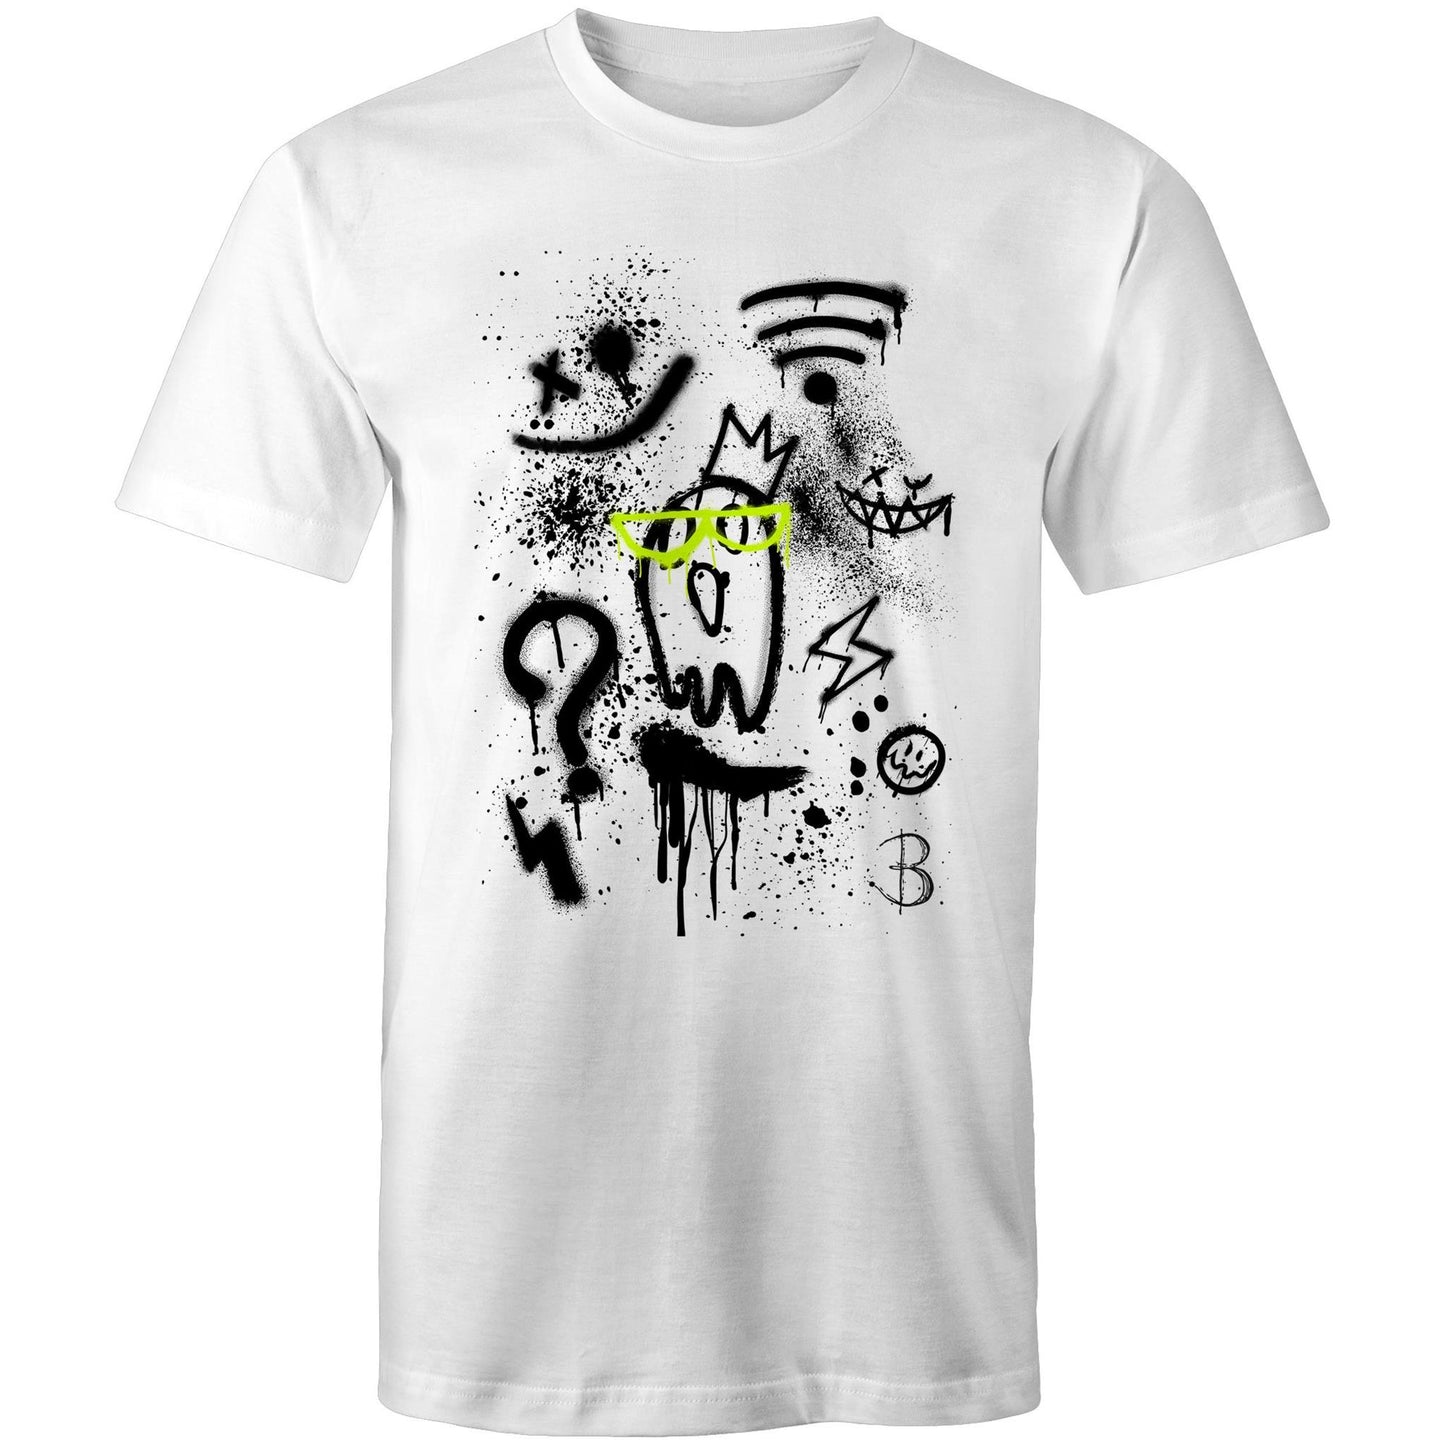 'OFF GRID' Luxury White Mens or Unisex  Premium 100% Cotton T-shirt front with design. Designed by Bridget Bardley